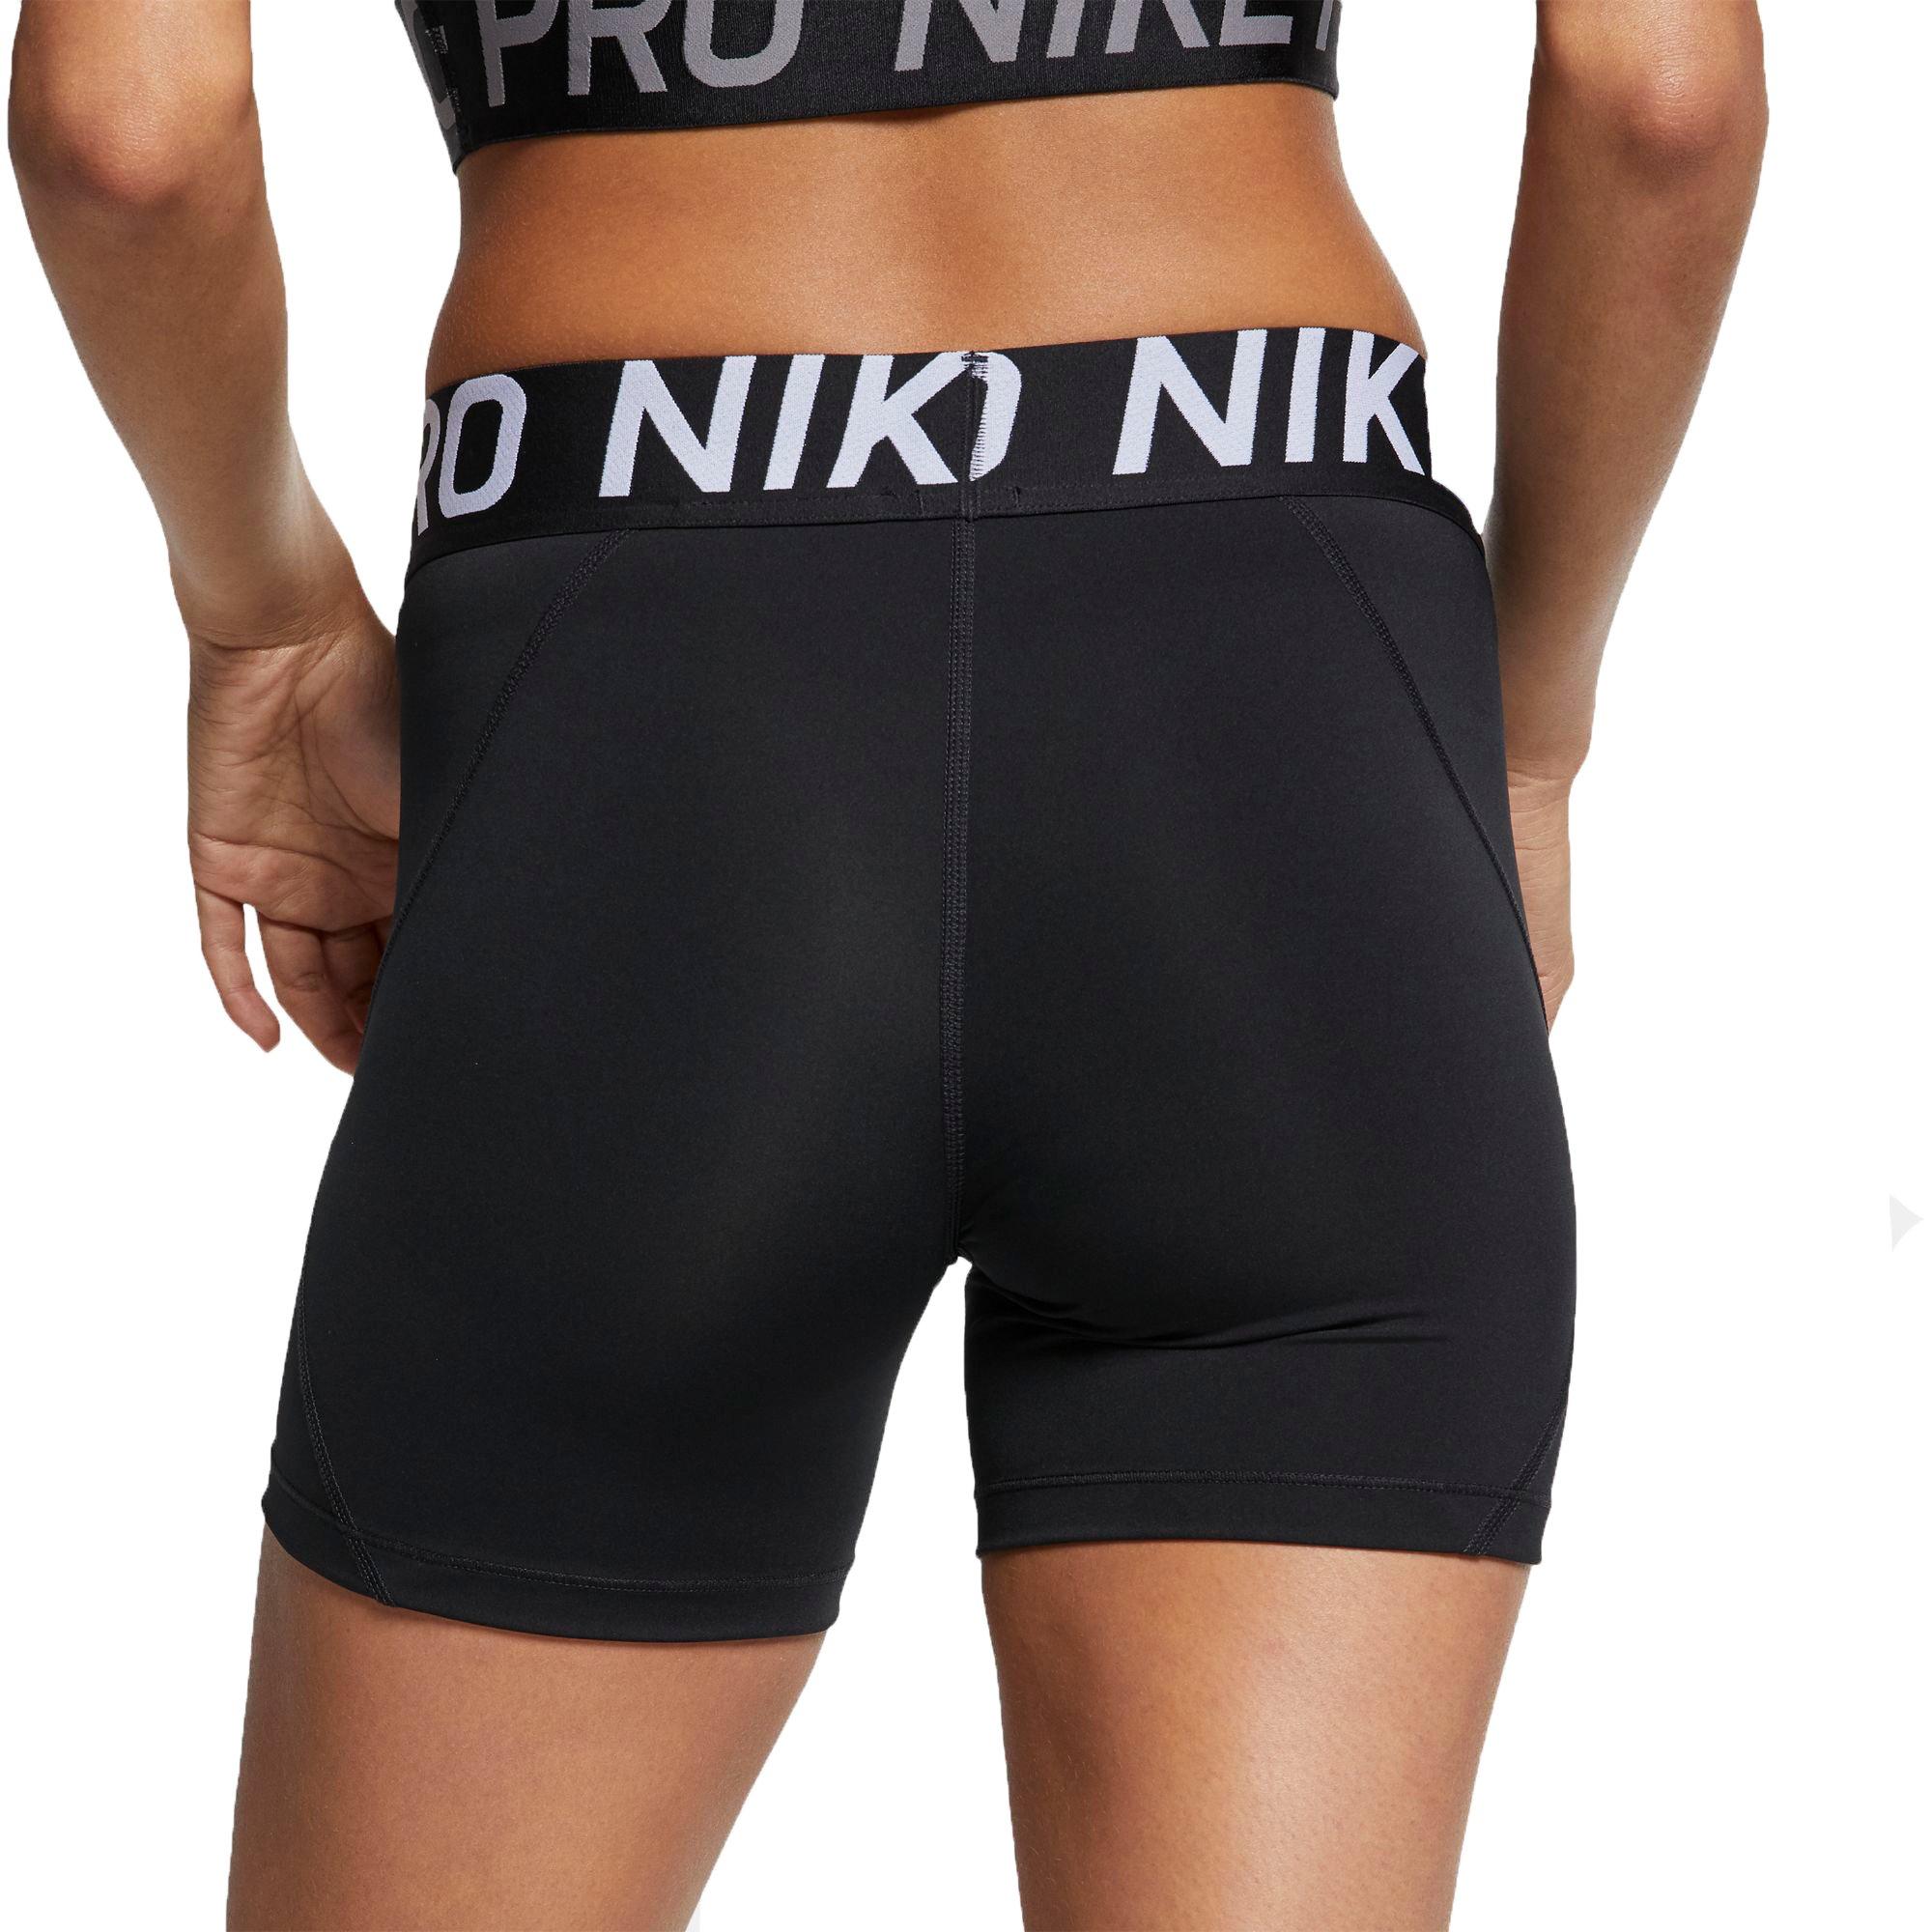 nike pro training 5 inch shorts in navy